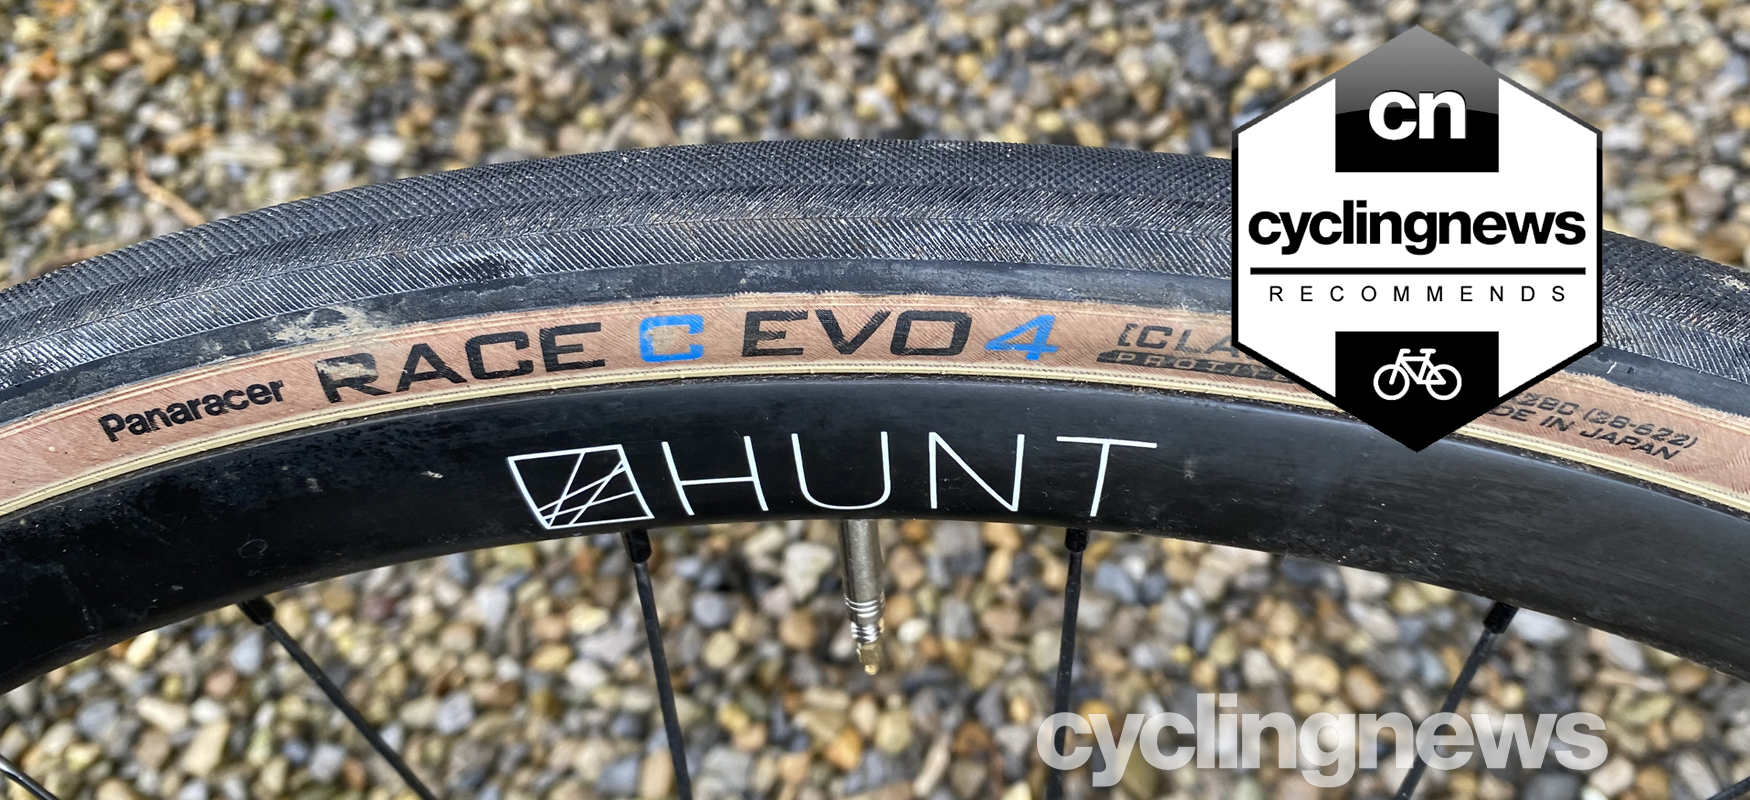 Panaracer Race C Evo 4 Classic tyre review | Cyclingnews